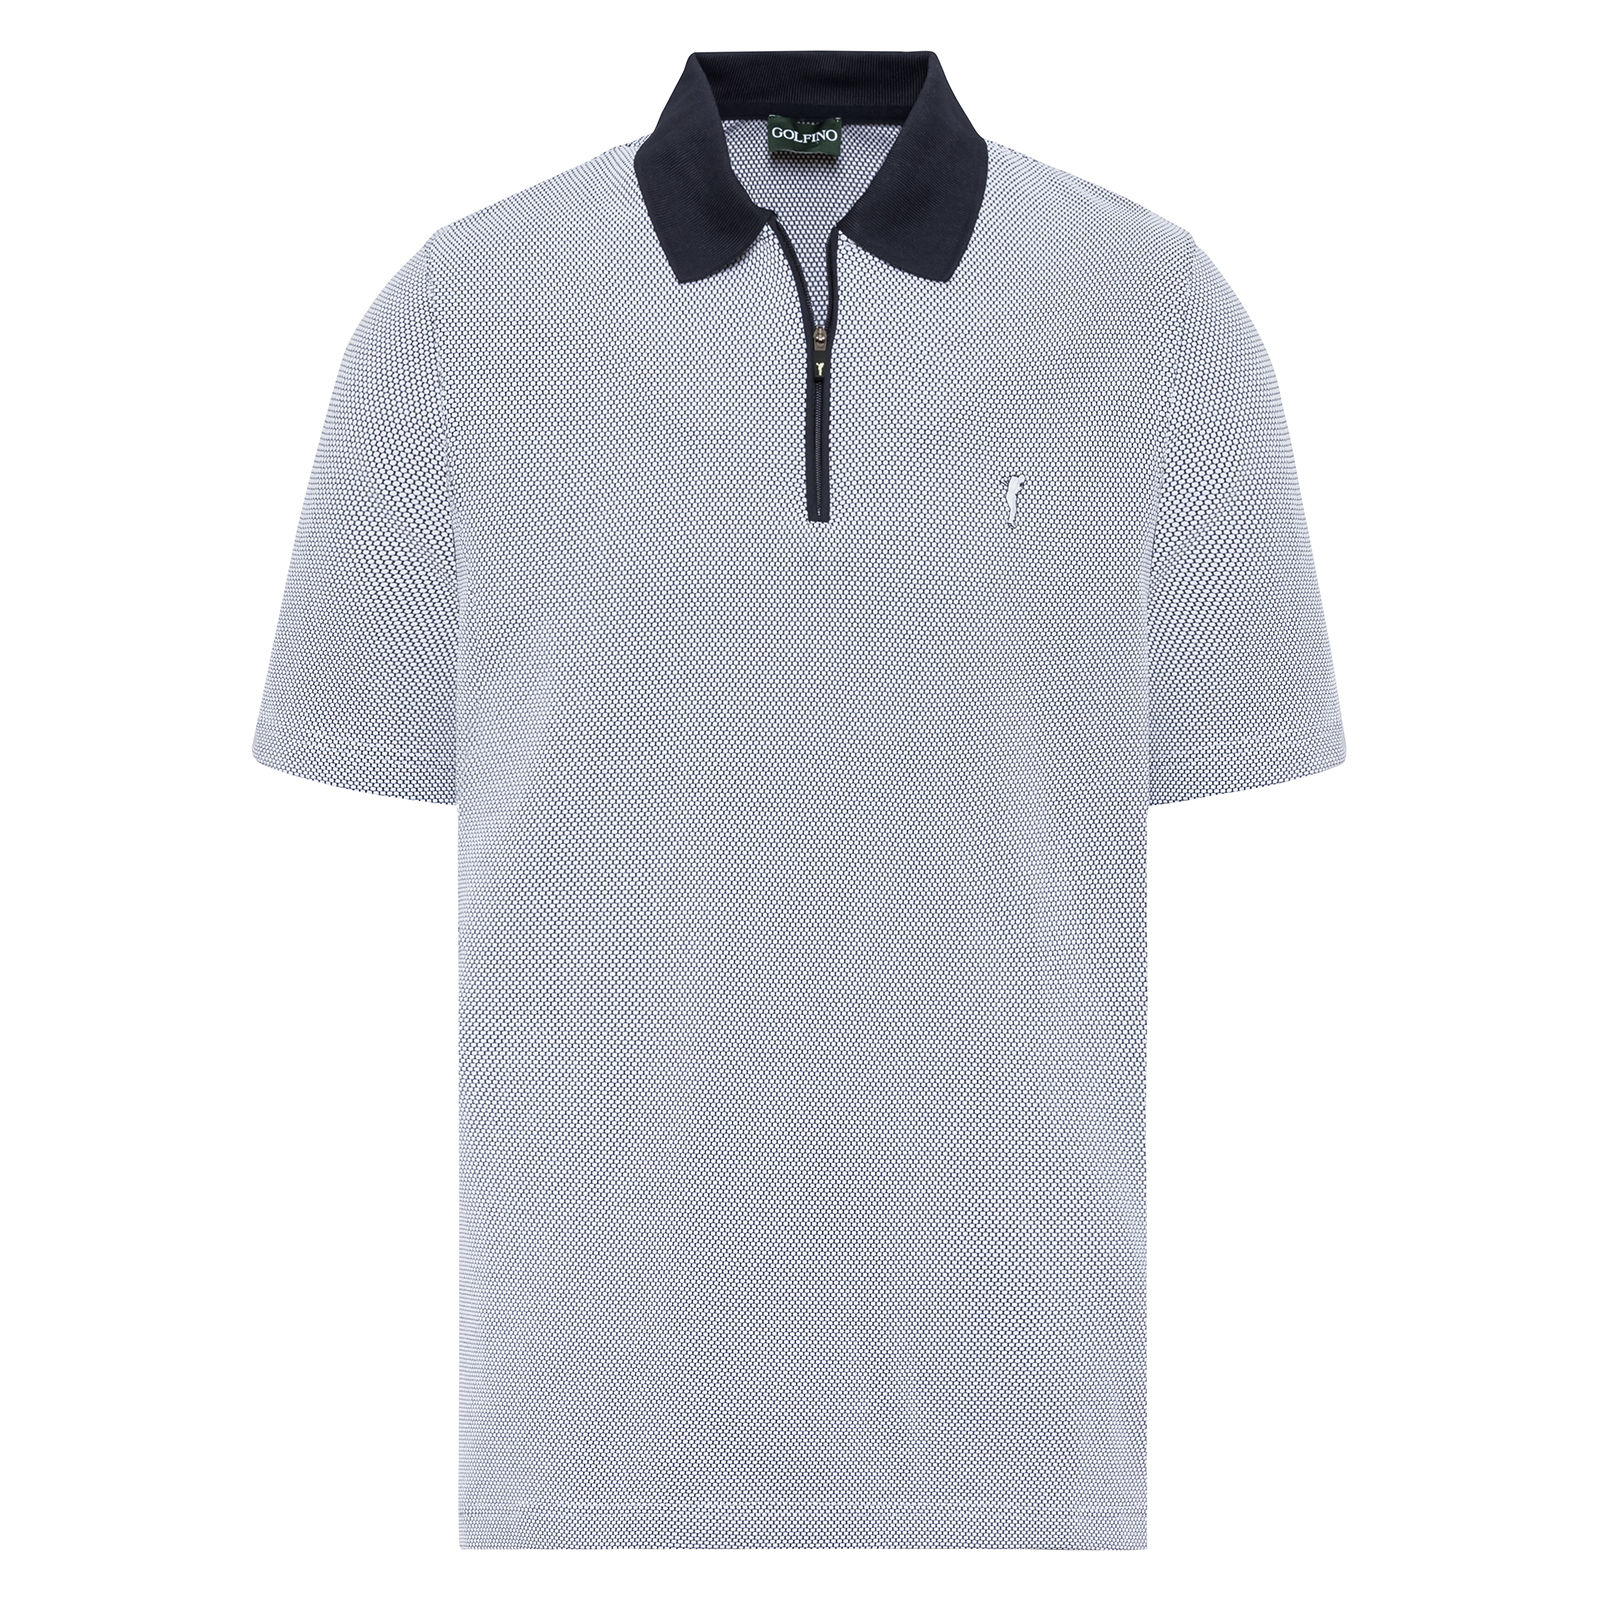 Men's golf polo shirt, moisture-regulating, made from bubble Jacquard